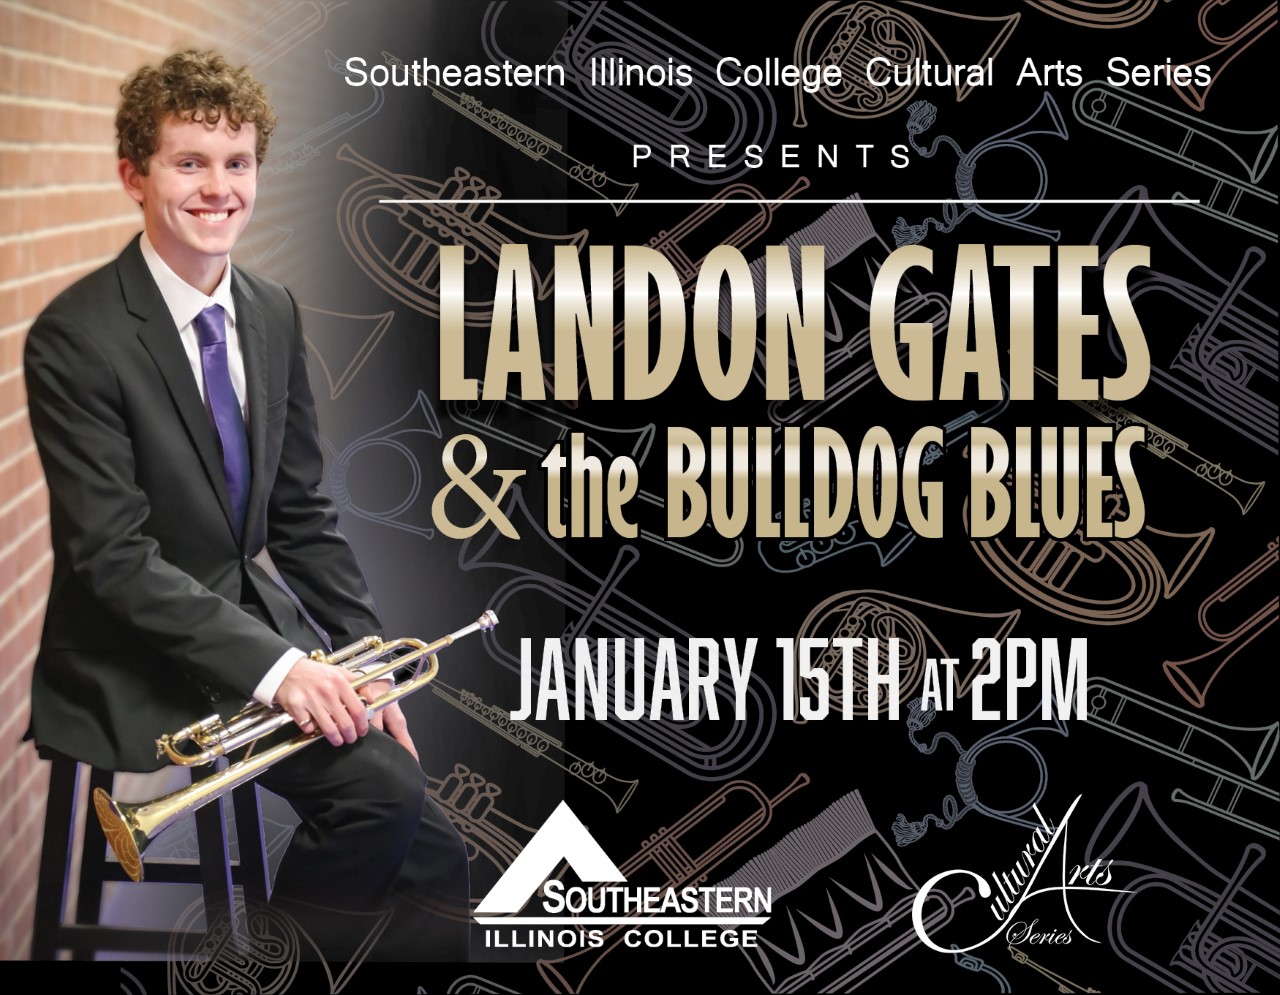 Landon Gates & the Bulldog Blues